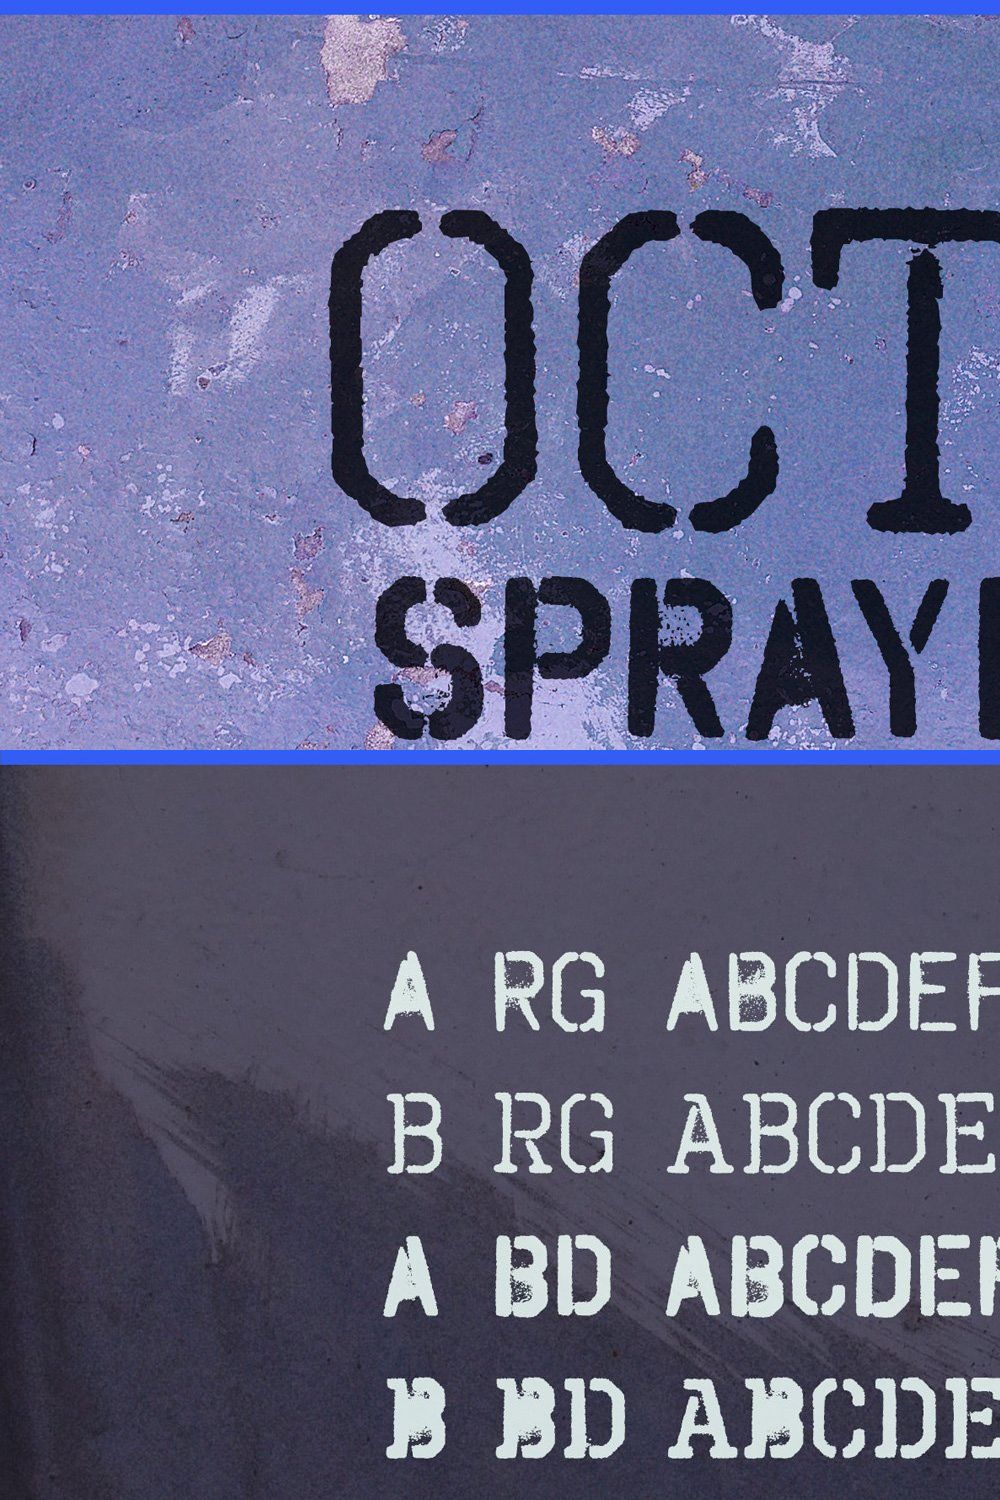 Octin Spraypaint pinterest preview image.